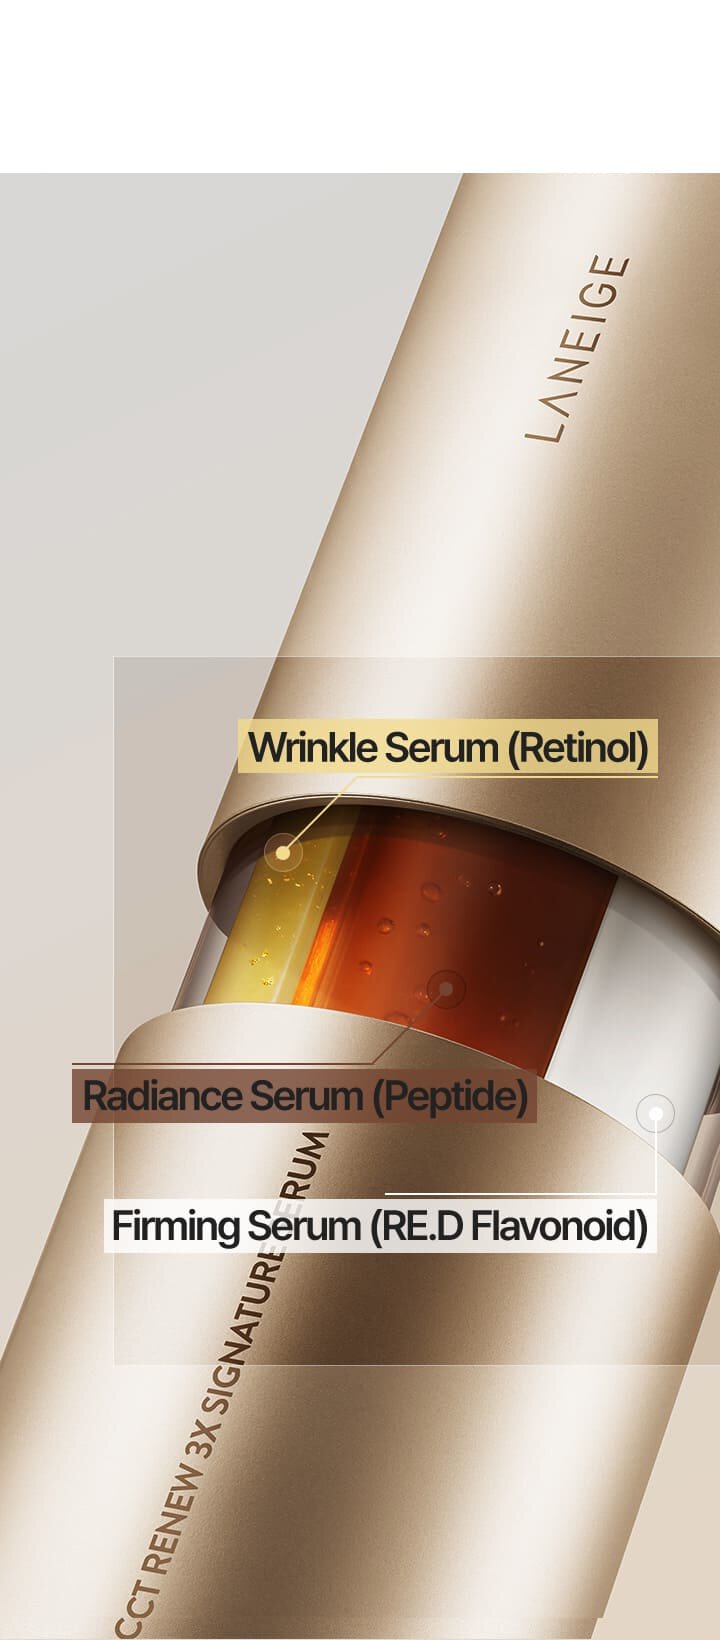 Perfect Renew 3X Signature Serum combines retinol wrinkle serum, peptide Skin Radiance serum and red flavonoid firming serums together.